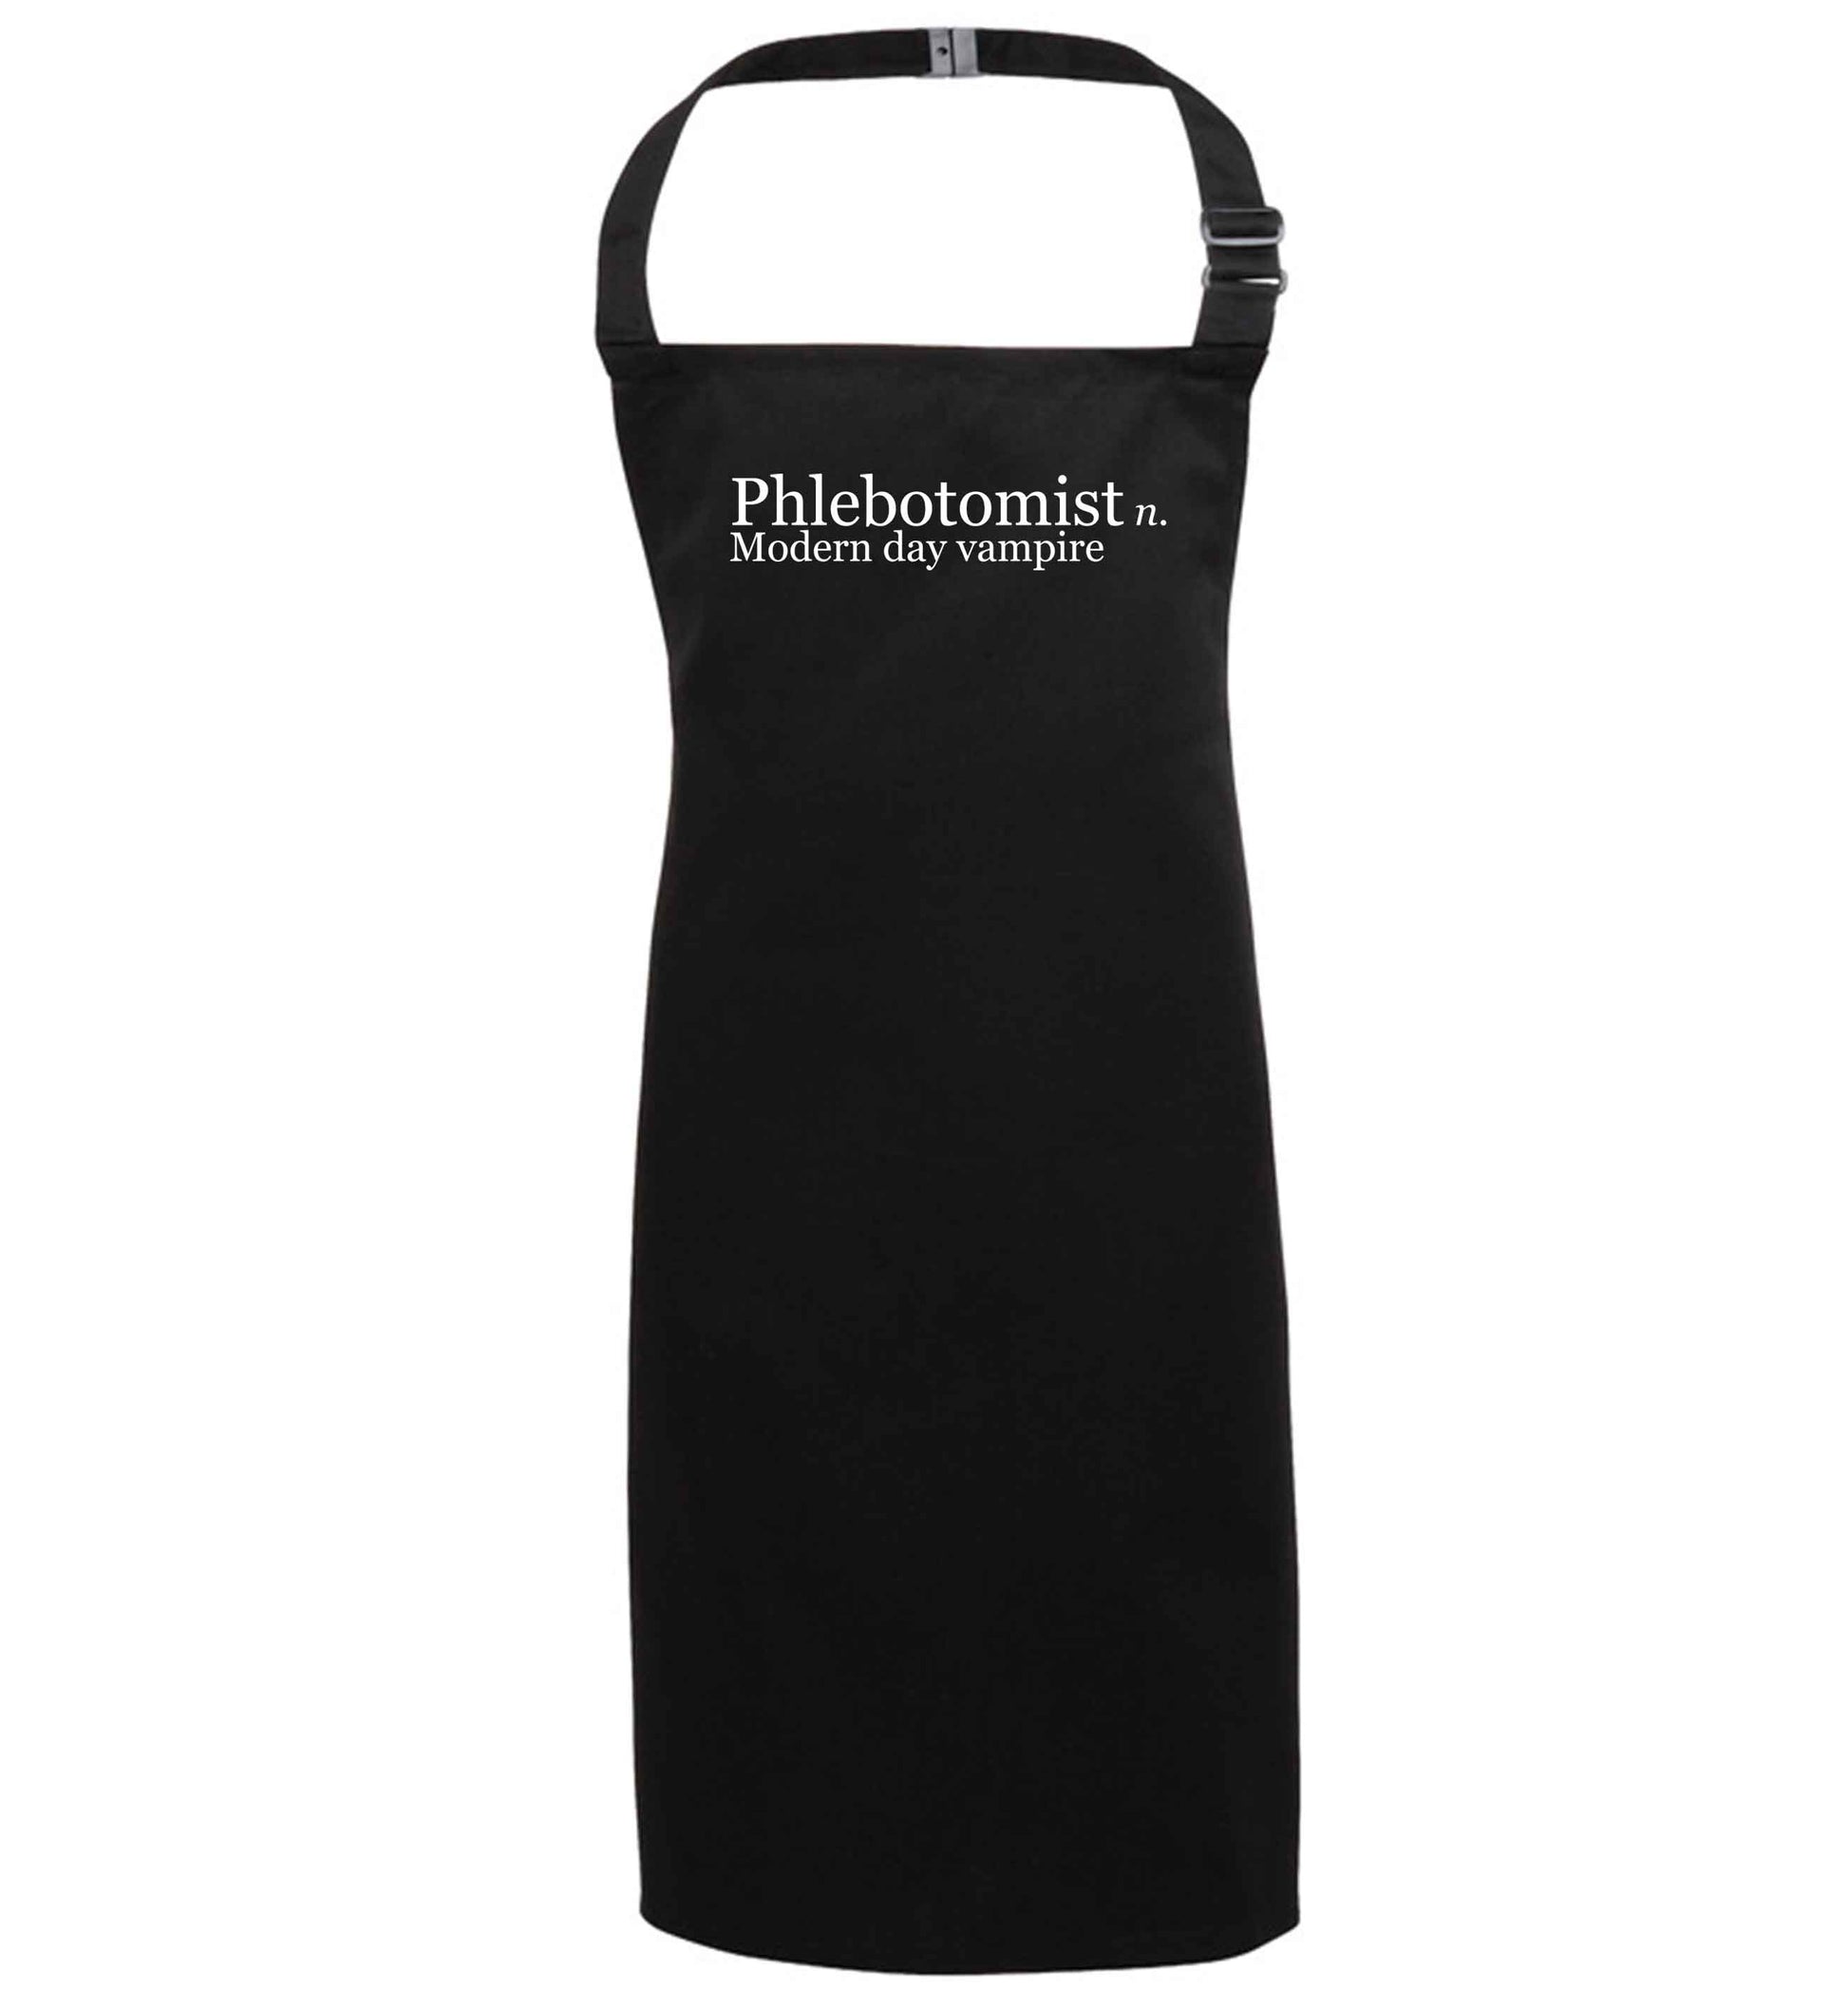 Phlebotomist - Modern day vampire black apron 7-10 years